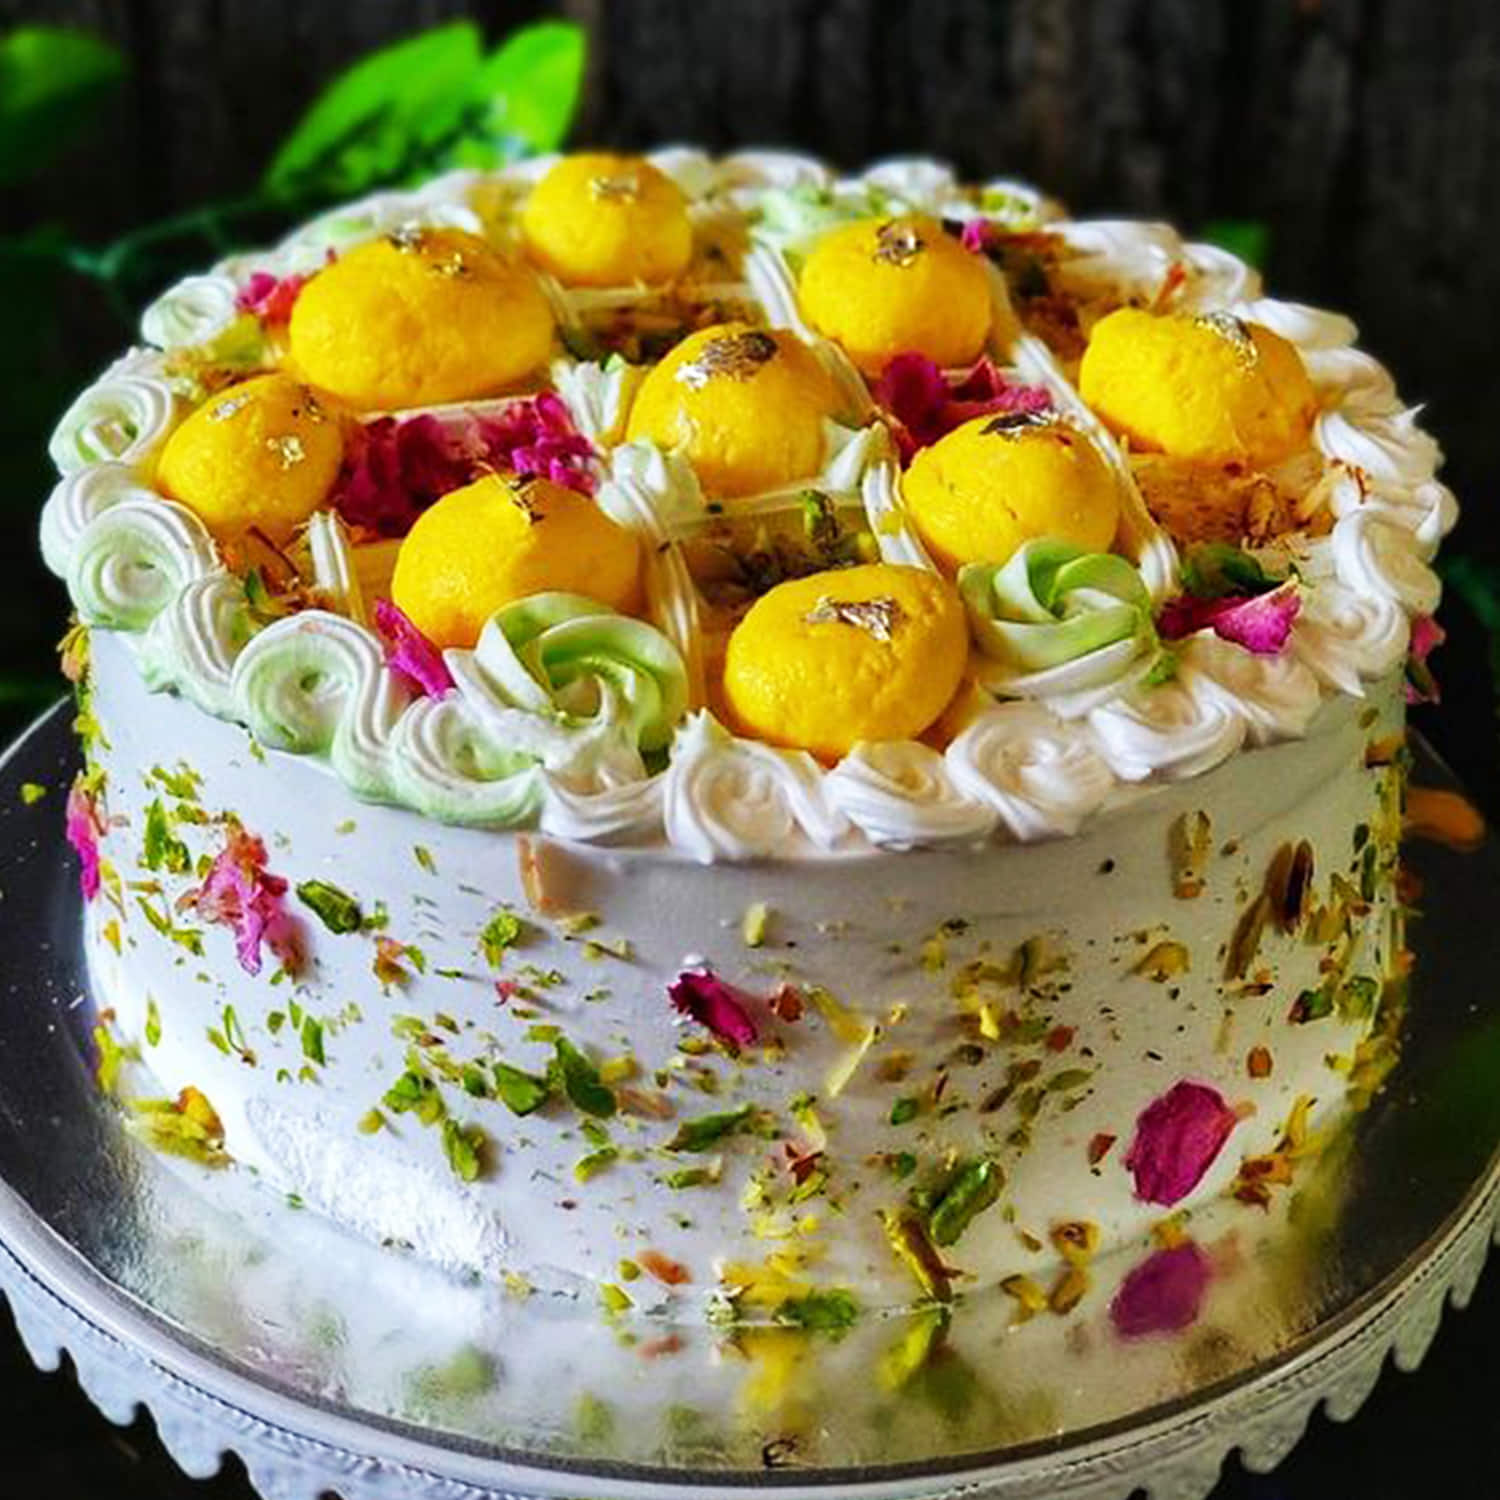 Aggregate more than 69 rasmalai cake